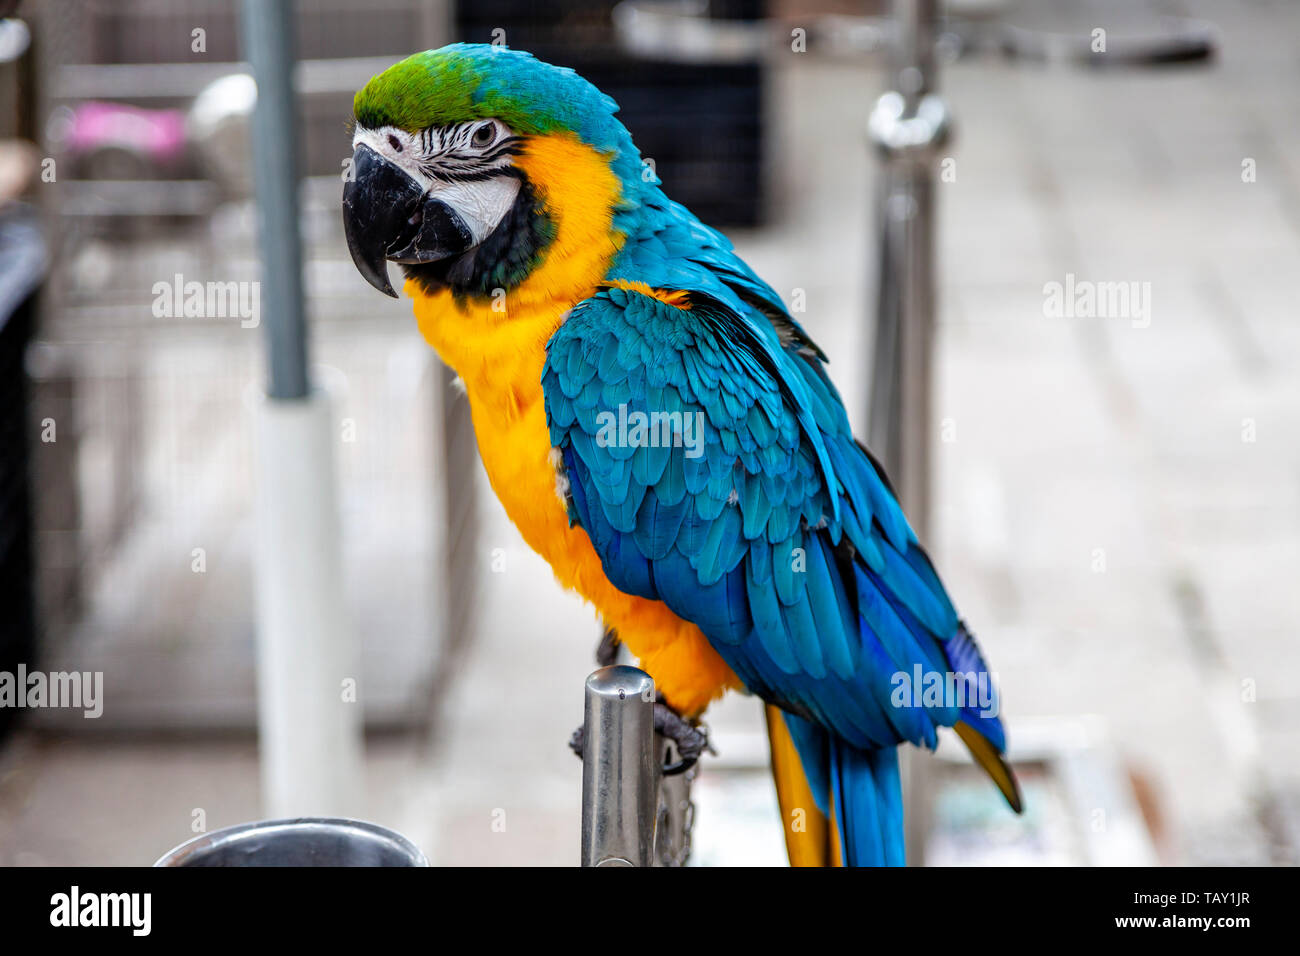 A Colourful Macau At The Yuen Po Street Bird Garden, Hong Kong, China Stock Photo